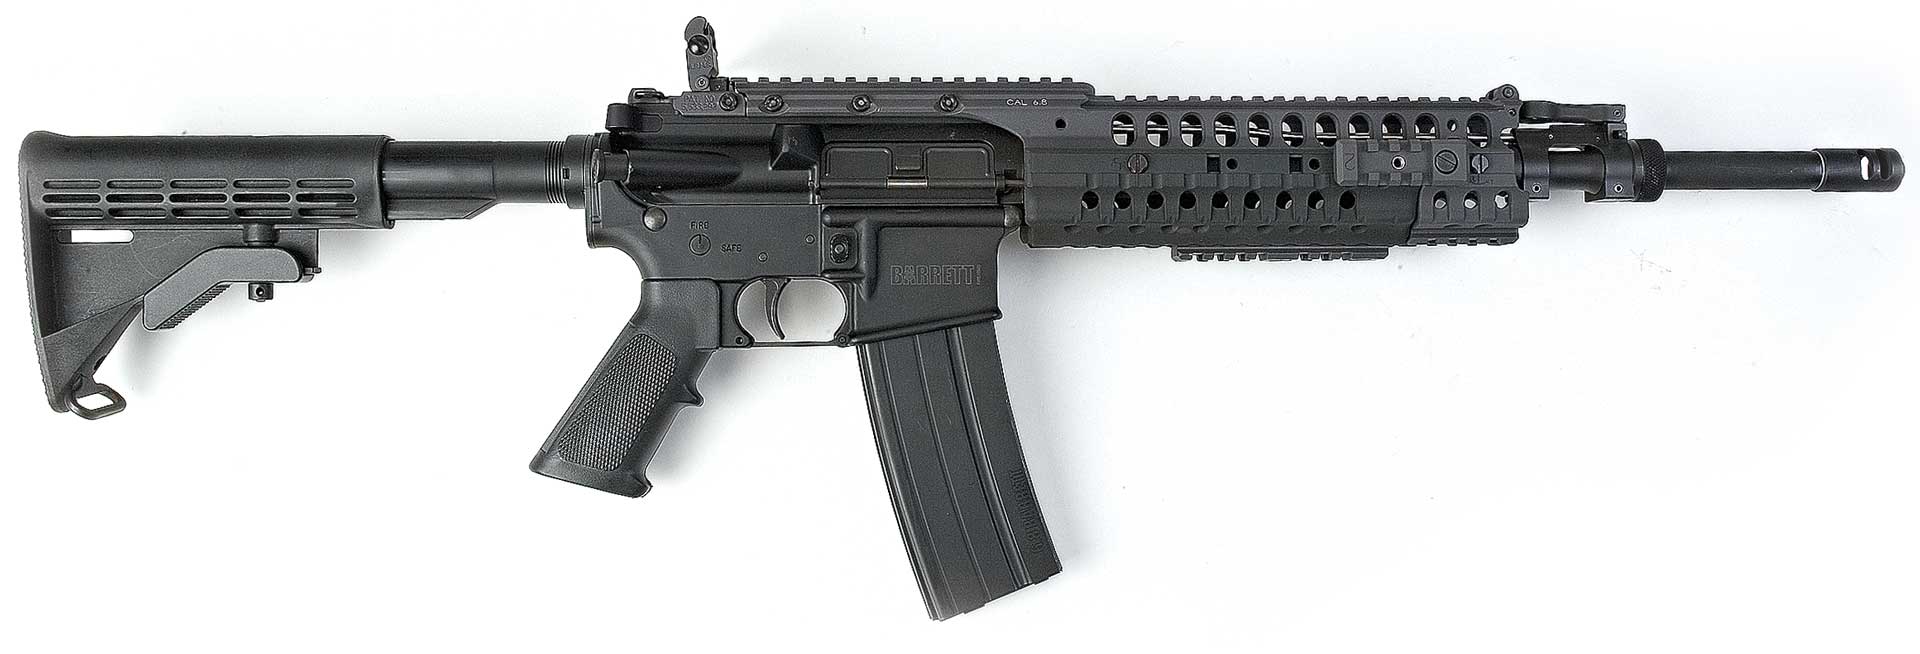 right side black rifle ar-style semi-automatic carbine 6.8 SPC